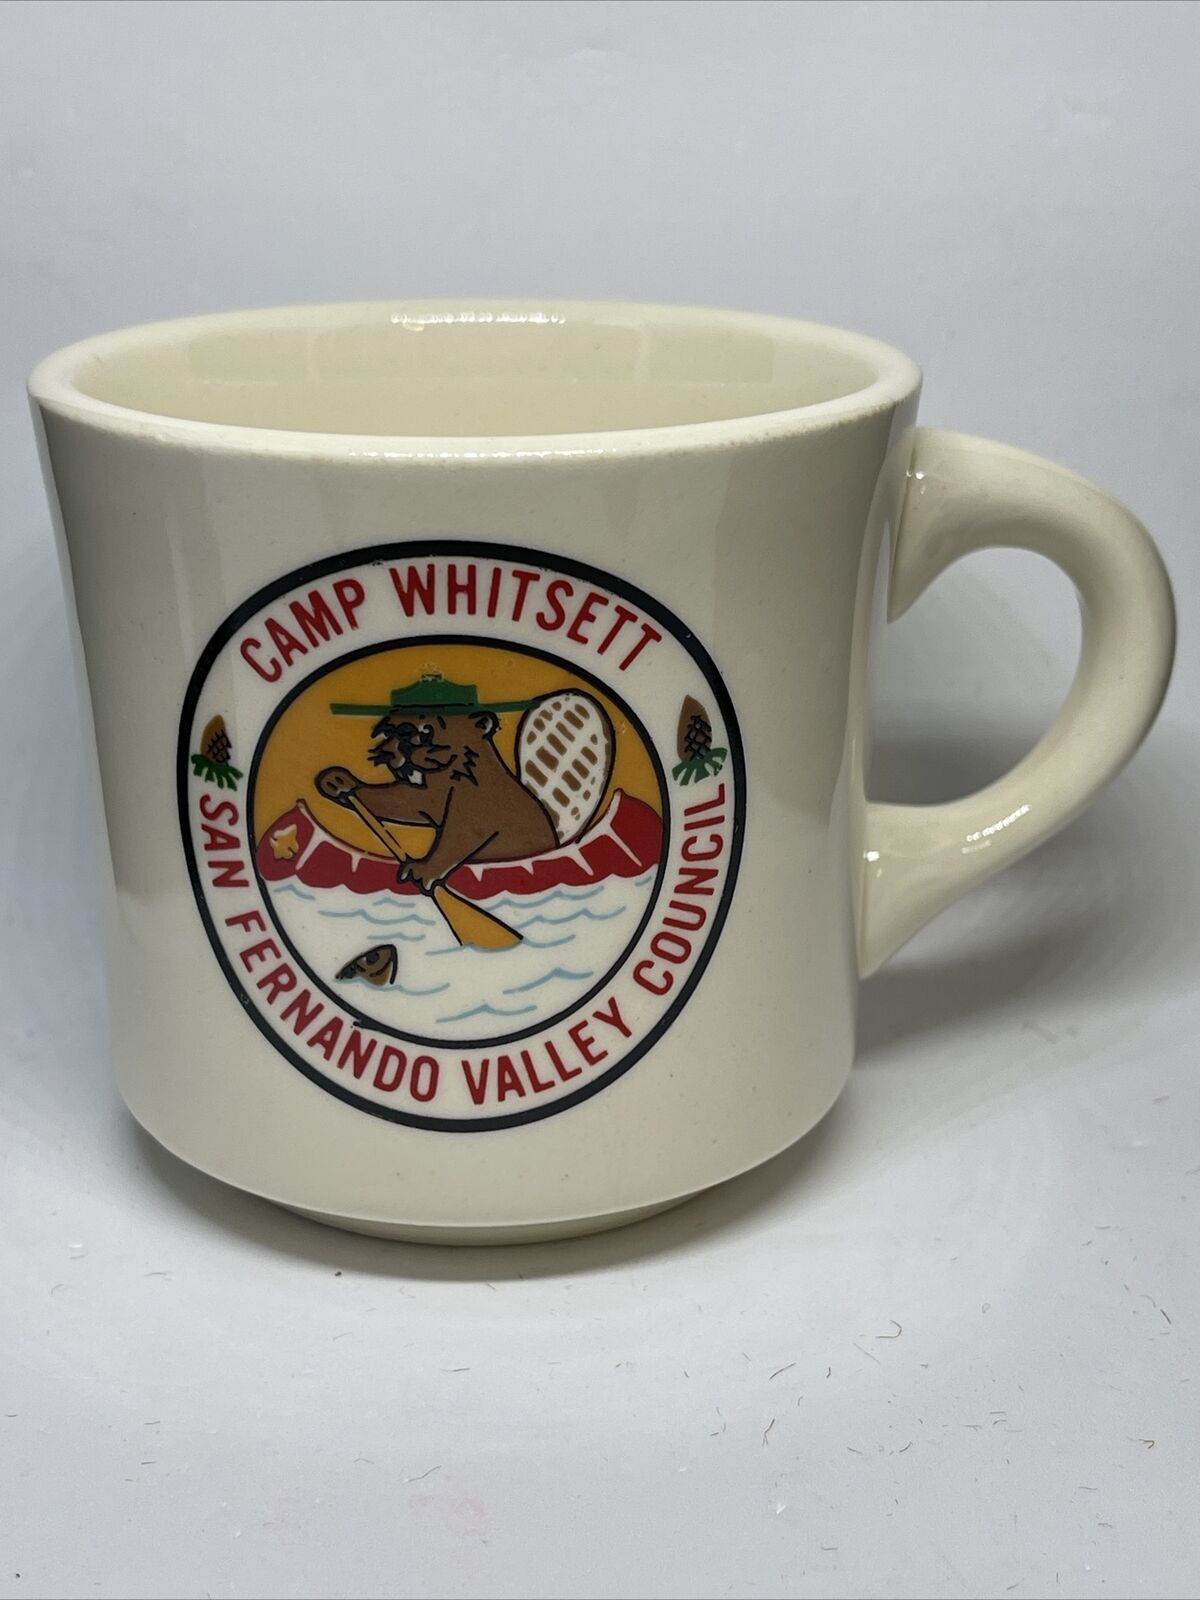 Vintage BSA Boy Scouts Coffee Cup Mug,Camp Whitsett, San Fernando Valley Council